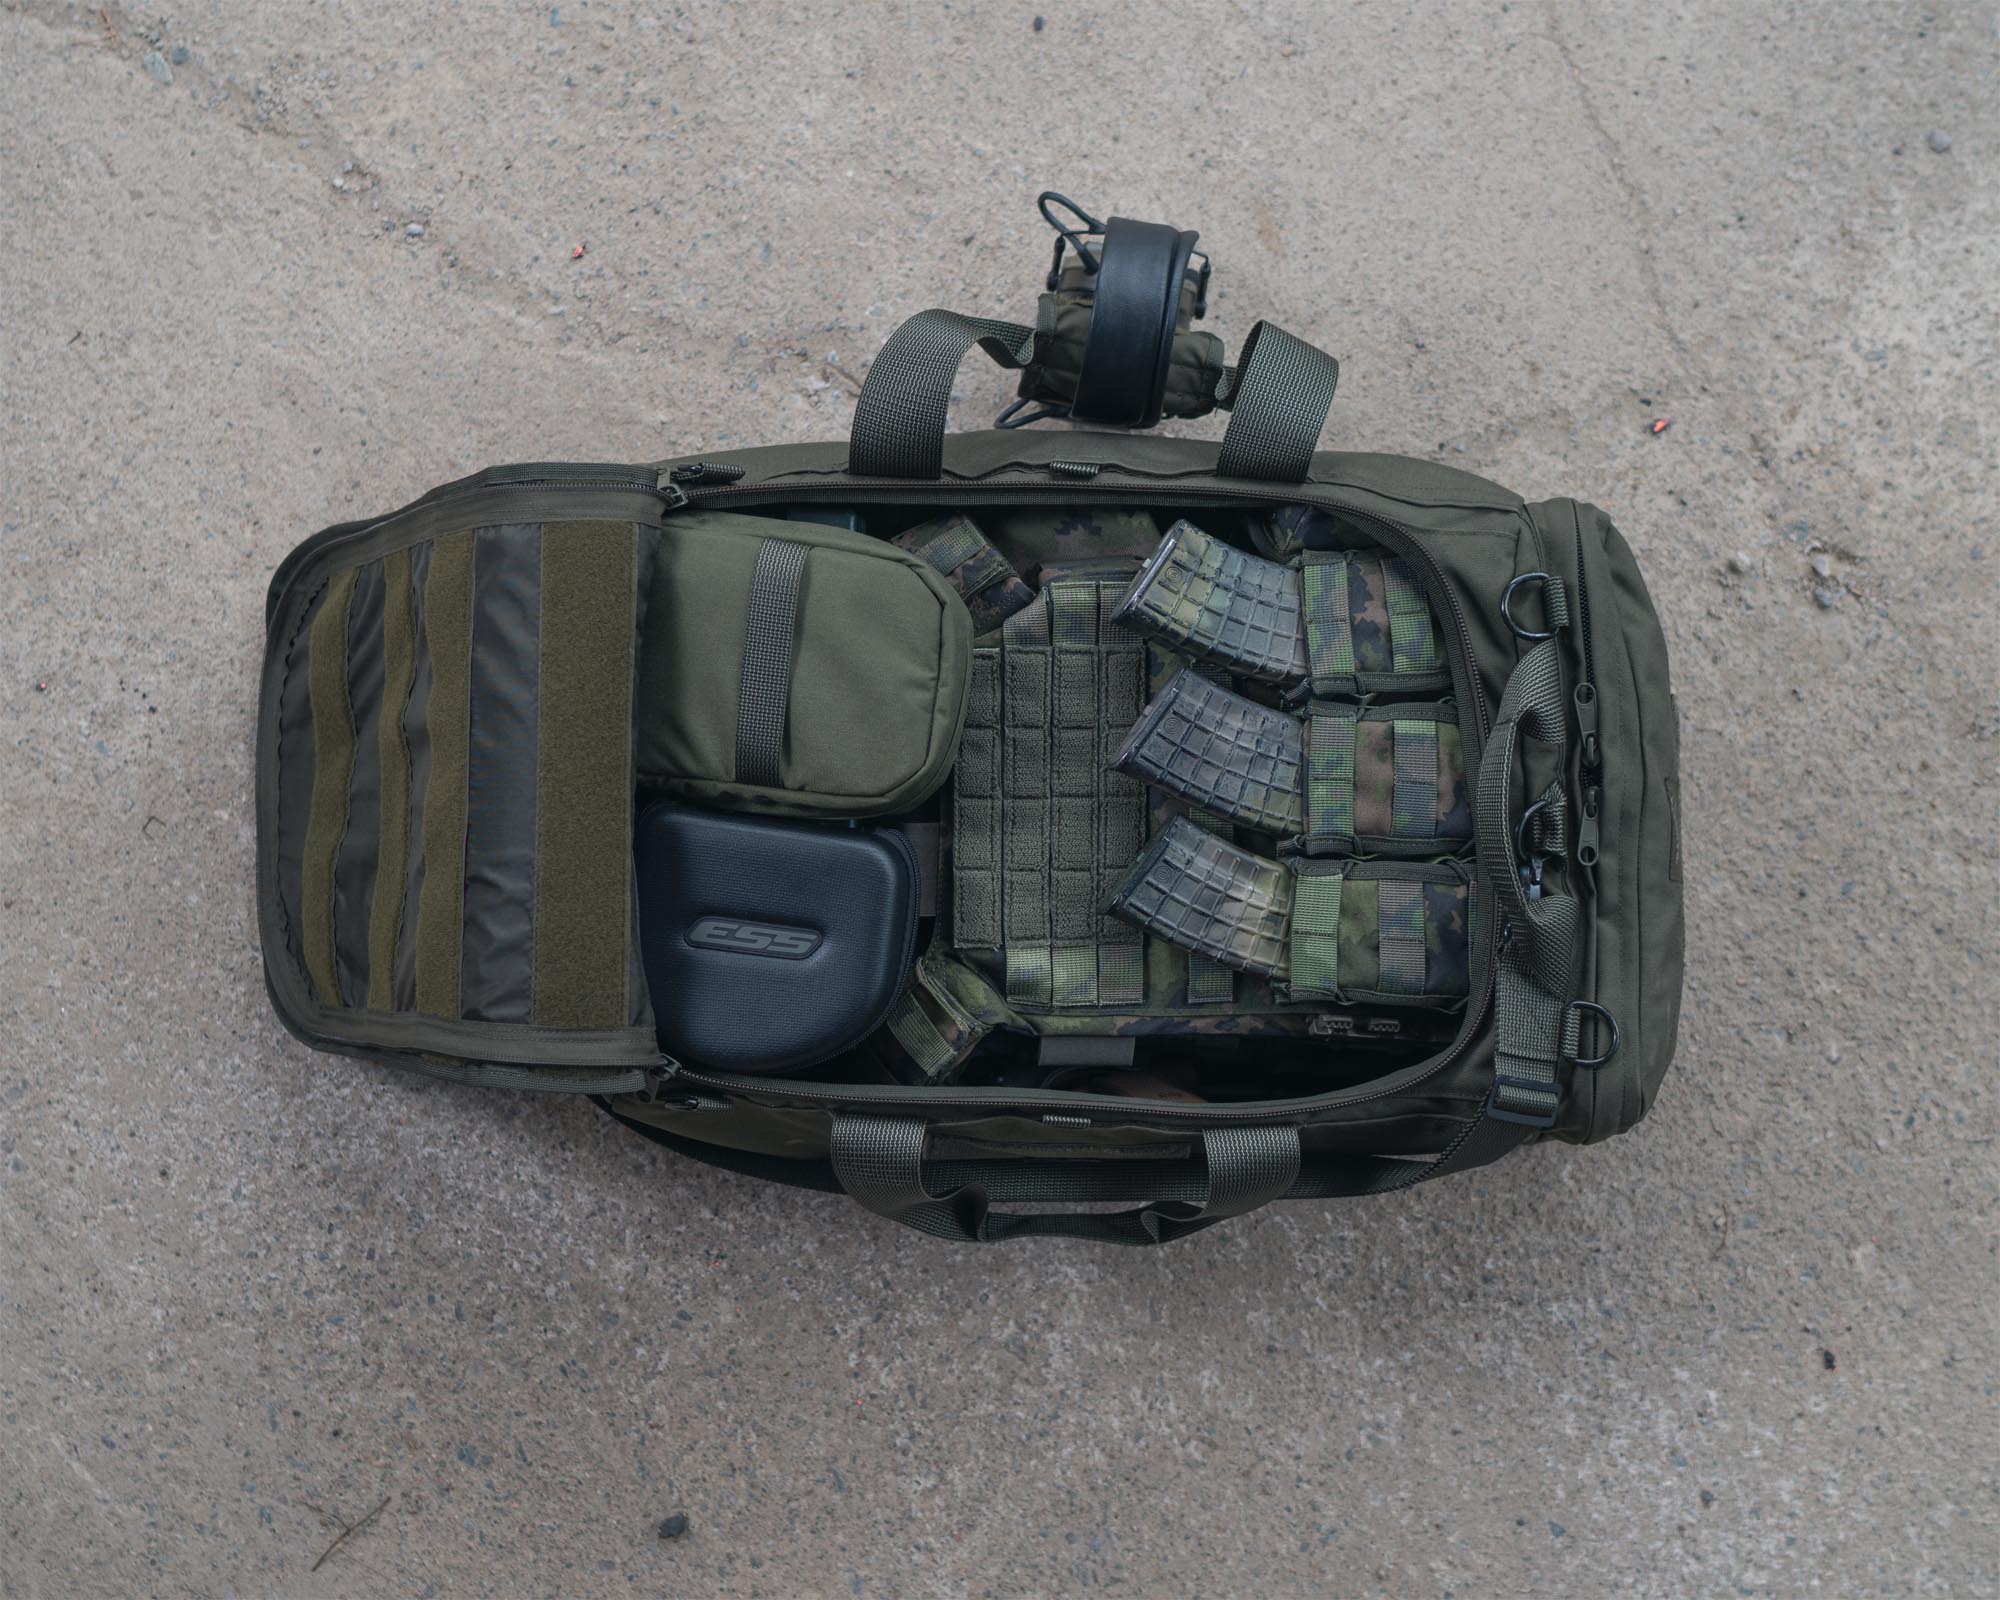 vojaška transportna torba, transportna torba, duffle bag, SAVOTTA, B33 army shop, army shop, B33-Tactical, B33 Tactical, opremljen.si, trgovina z vojaško opremo, vojaška trgovina, nosilni sistemi, torbe